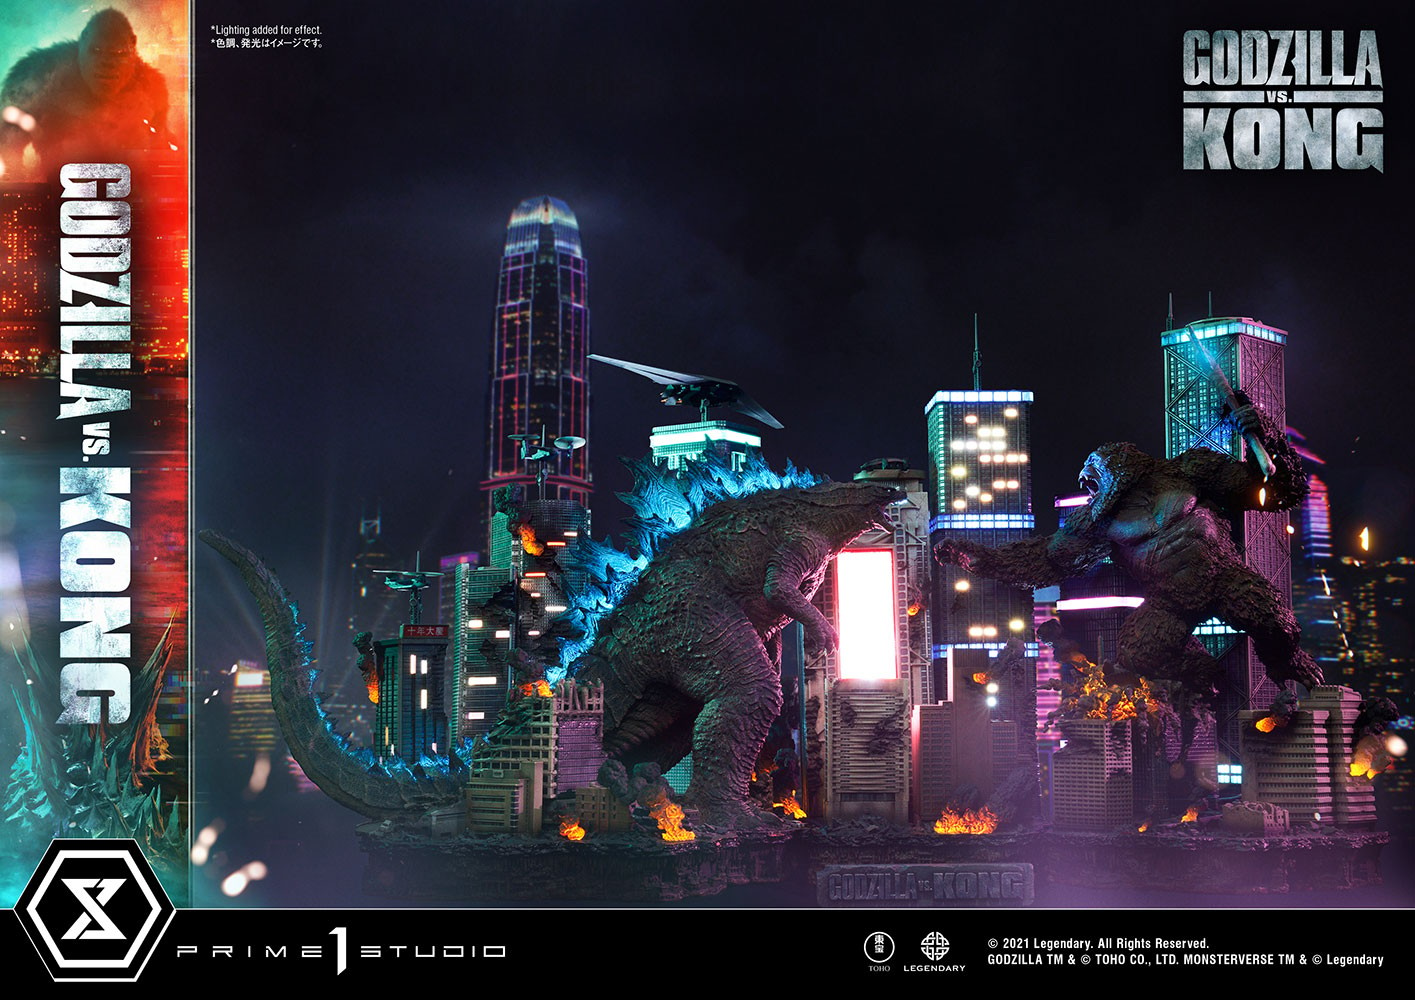 Godzilla vs Kong Final Battle (Prototype Shown) View 26